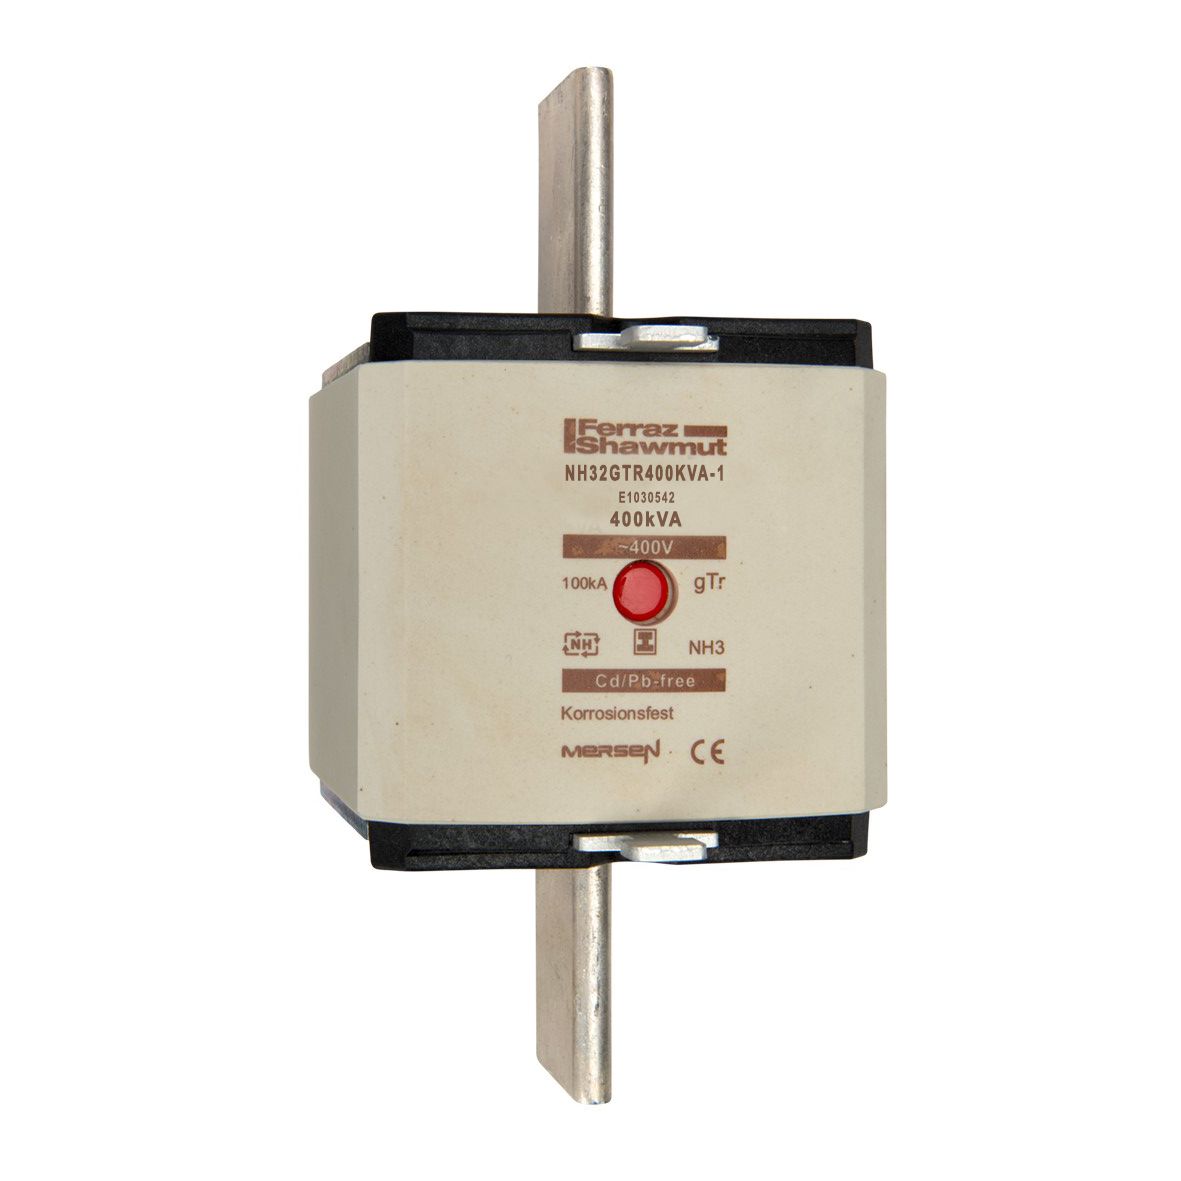 E1030542A - NH fuse-link gTr, 400VAC, size 3, 400KVA, centre indicator/insulated tags